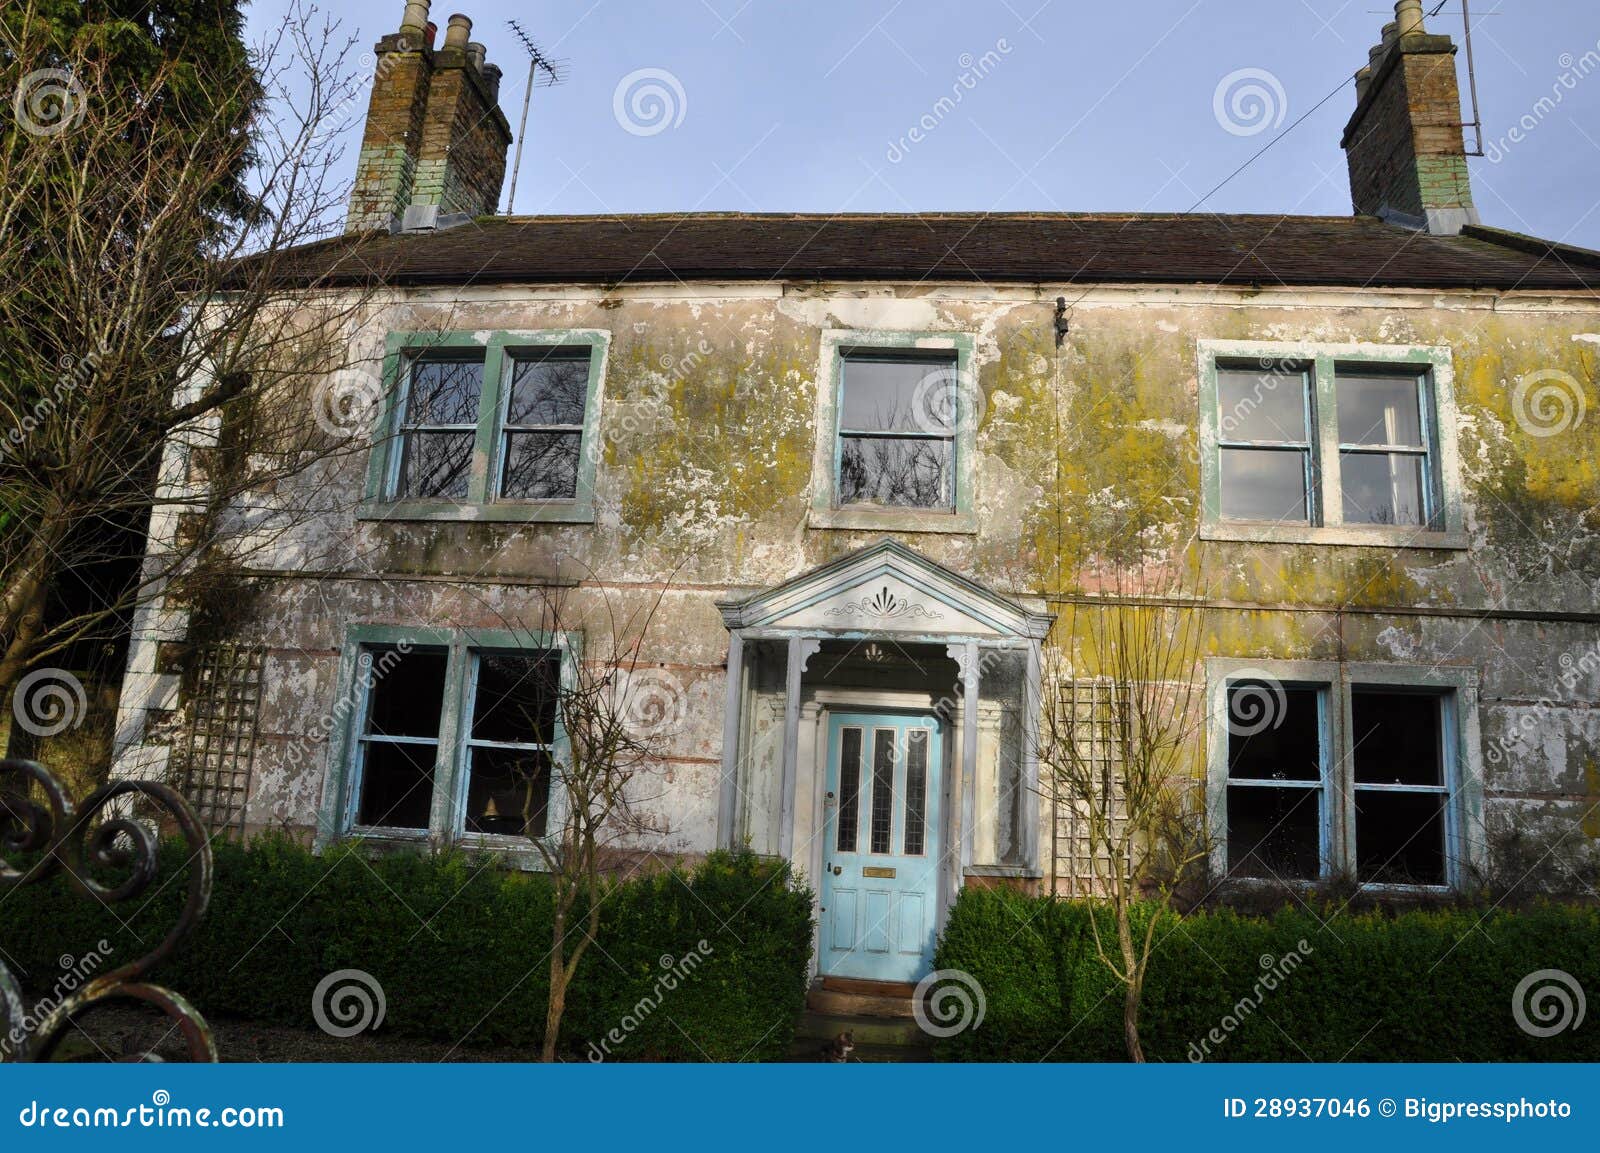 rennovation and restoration old house england